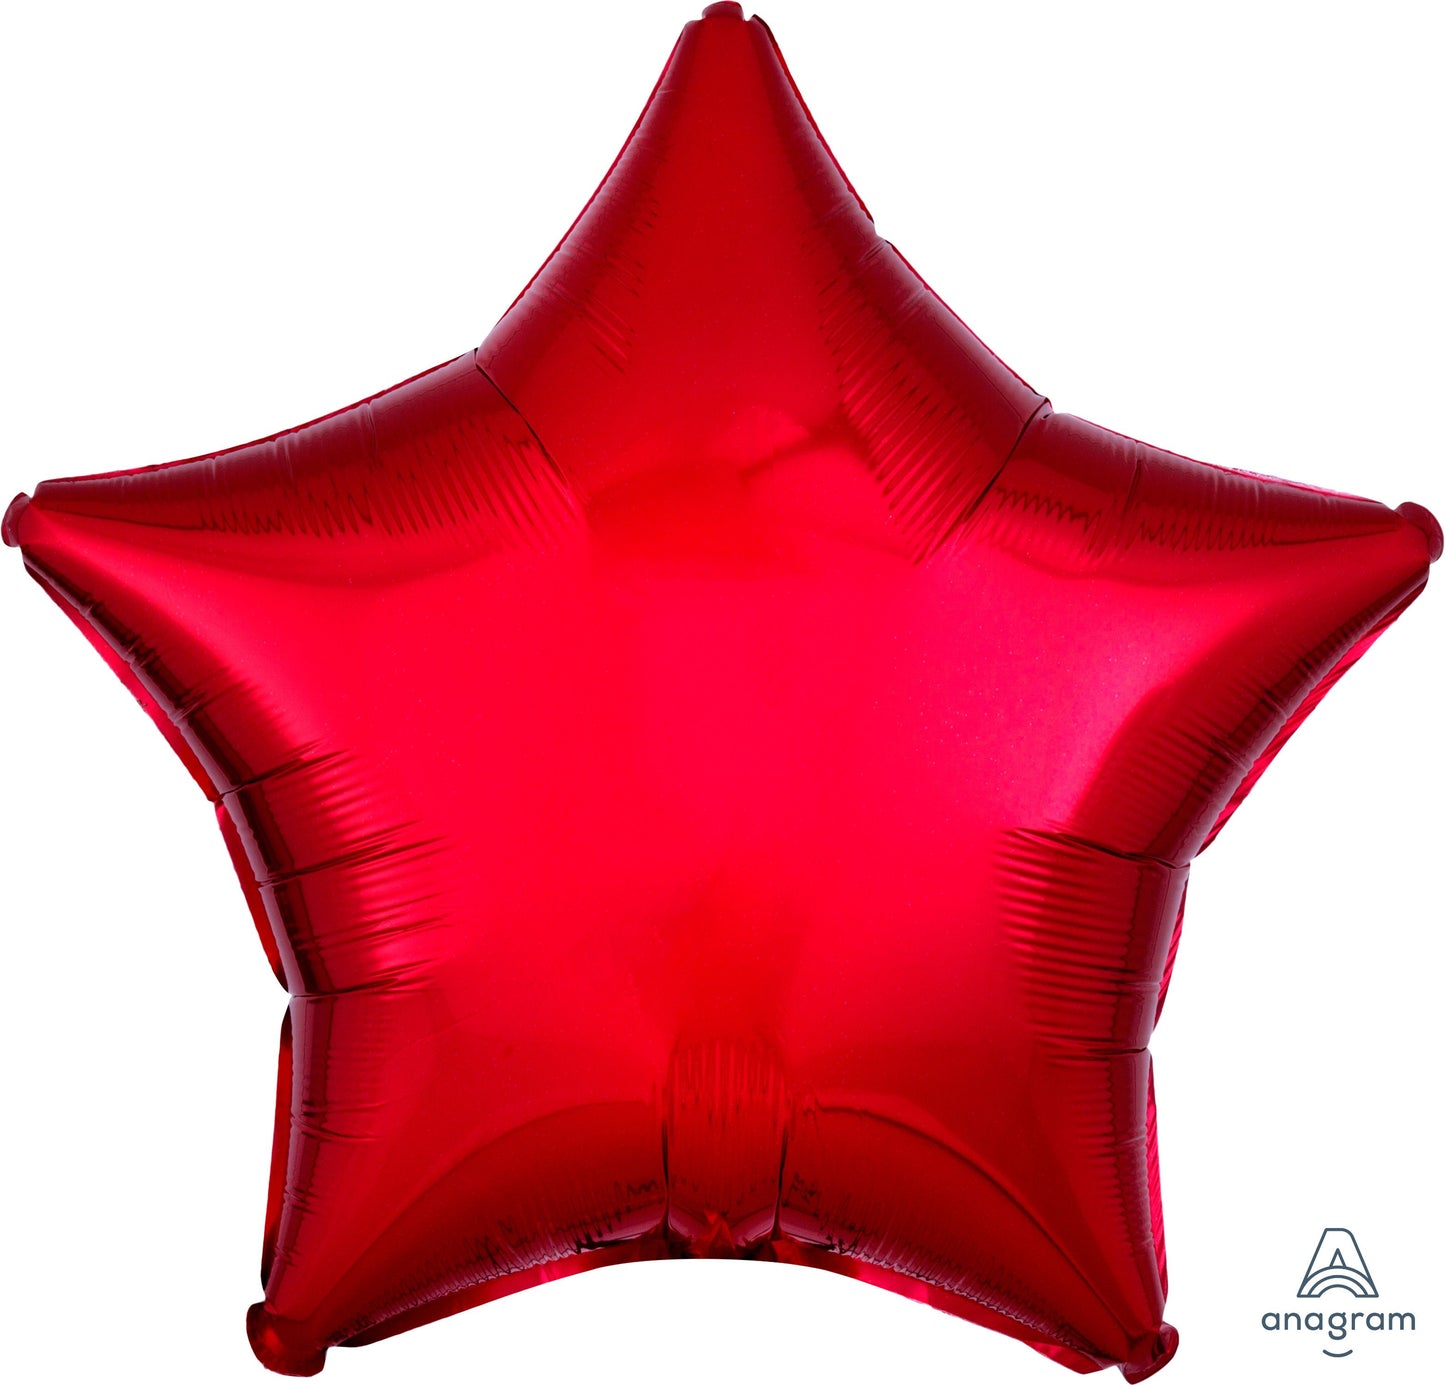 Red Star Mylar Balloon standard size